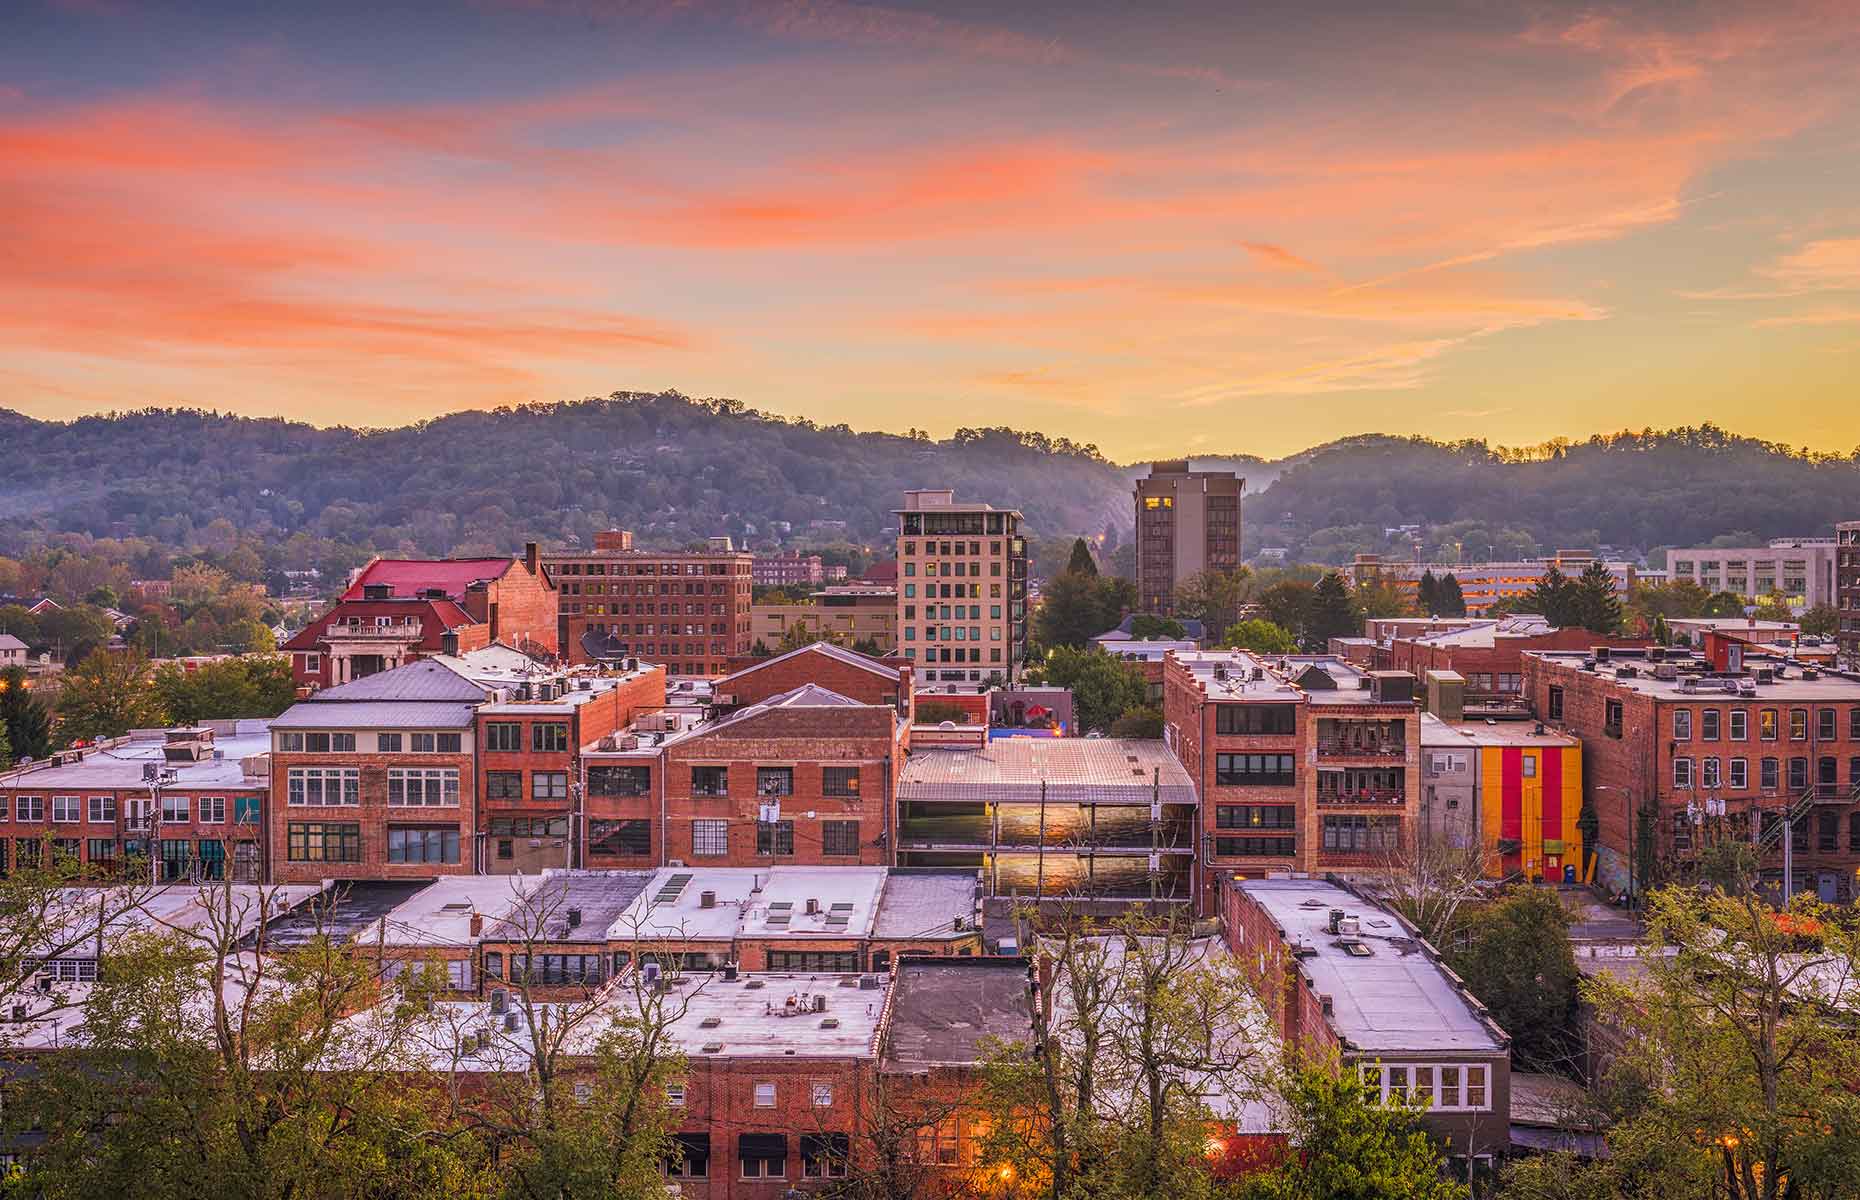 Asheville, North Carolina, USA (Image: Sean Pavone/Shutterstock)